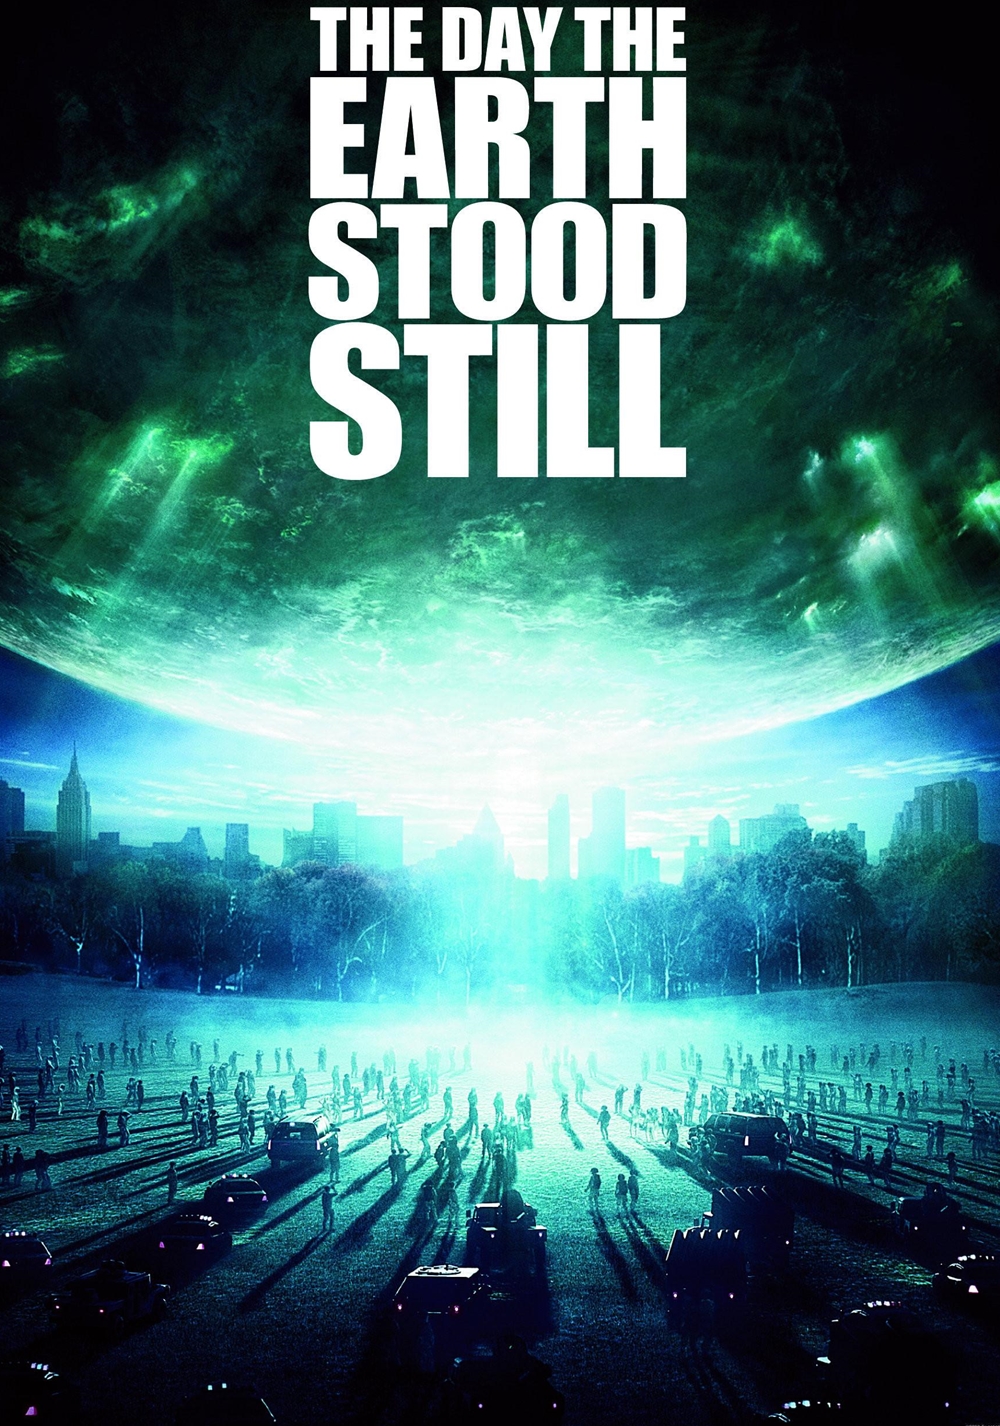 Movie The Day the Earth Stood Still (2008) Art.